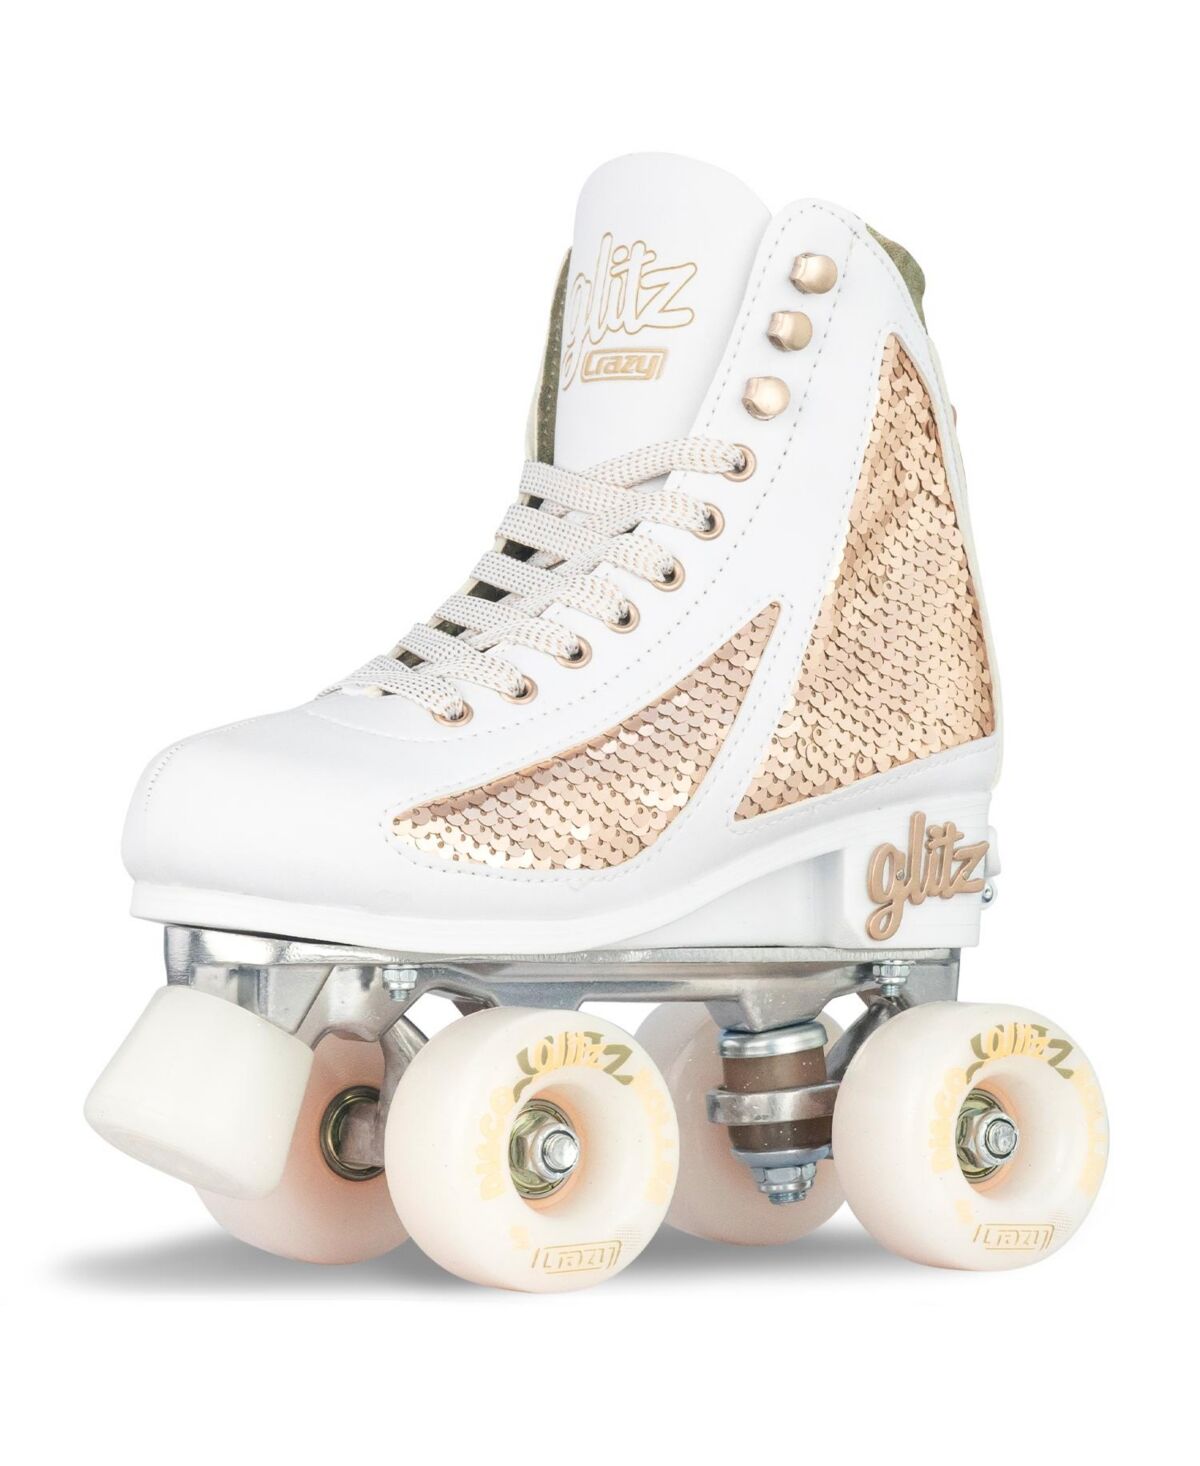 Crazy Skates Glitz Adjustable Roller Skates For Women And Girls - Size Adjustable To Fit 4 Sizes - Rose gold